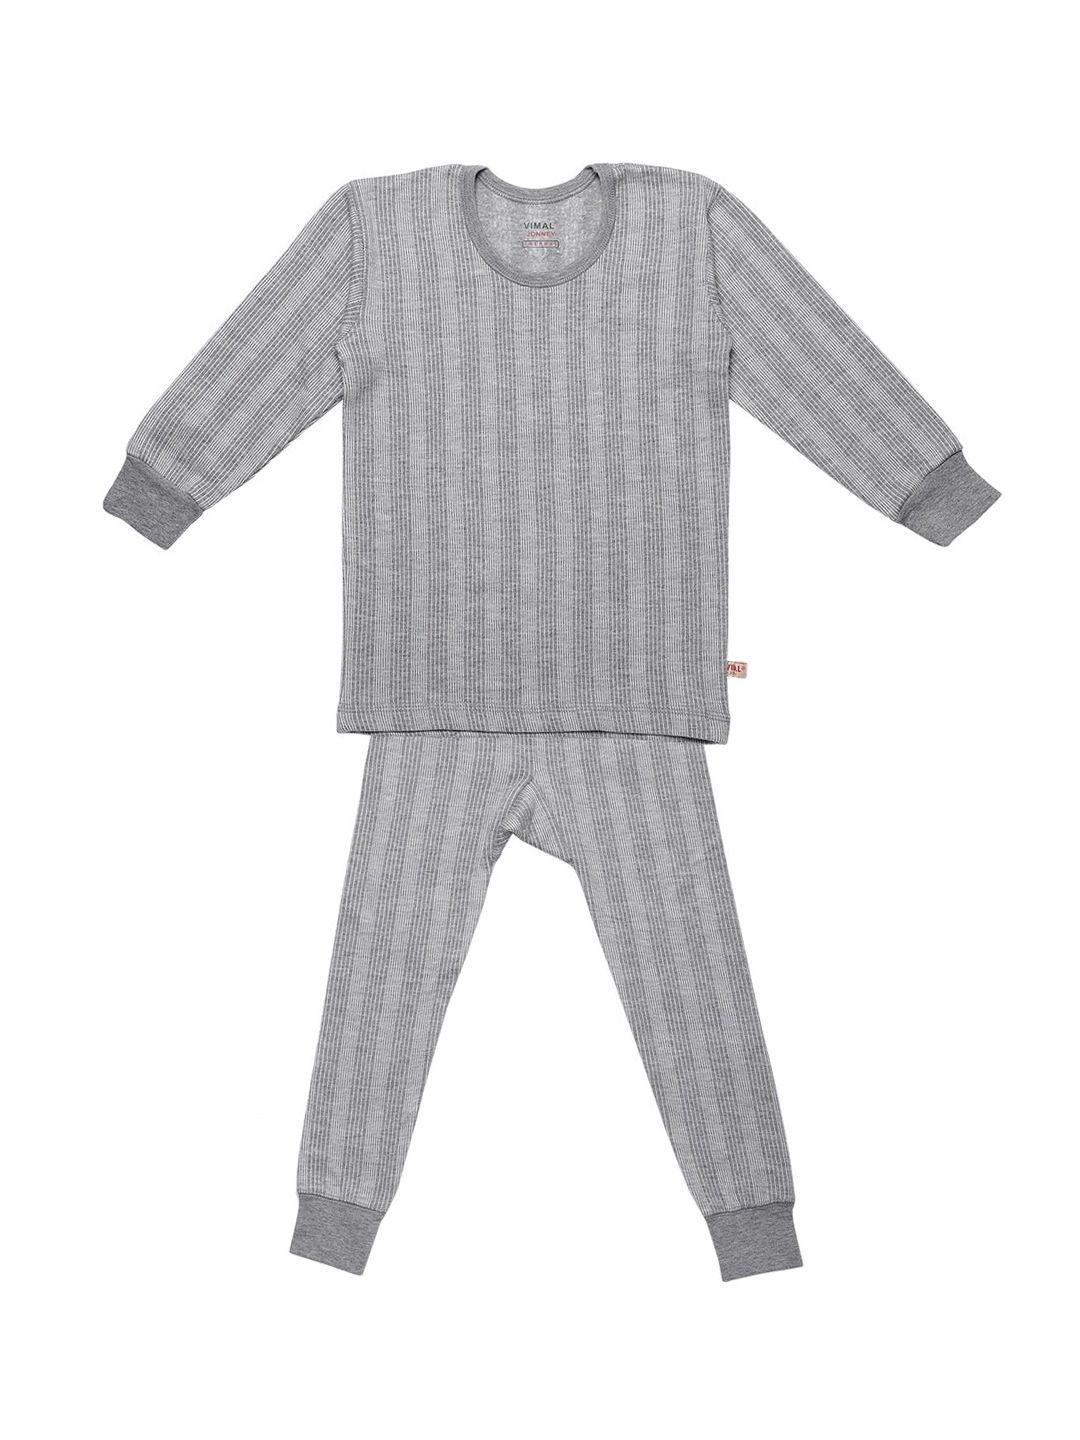 vimal-jonney-kids-striped-cotton-thermal-set